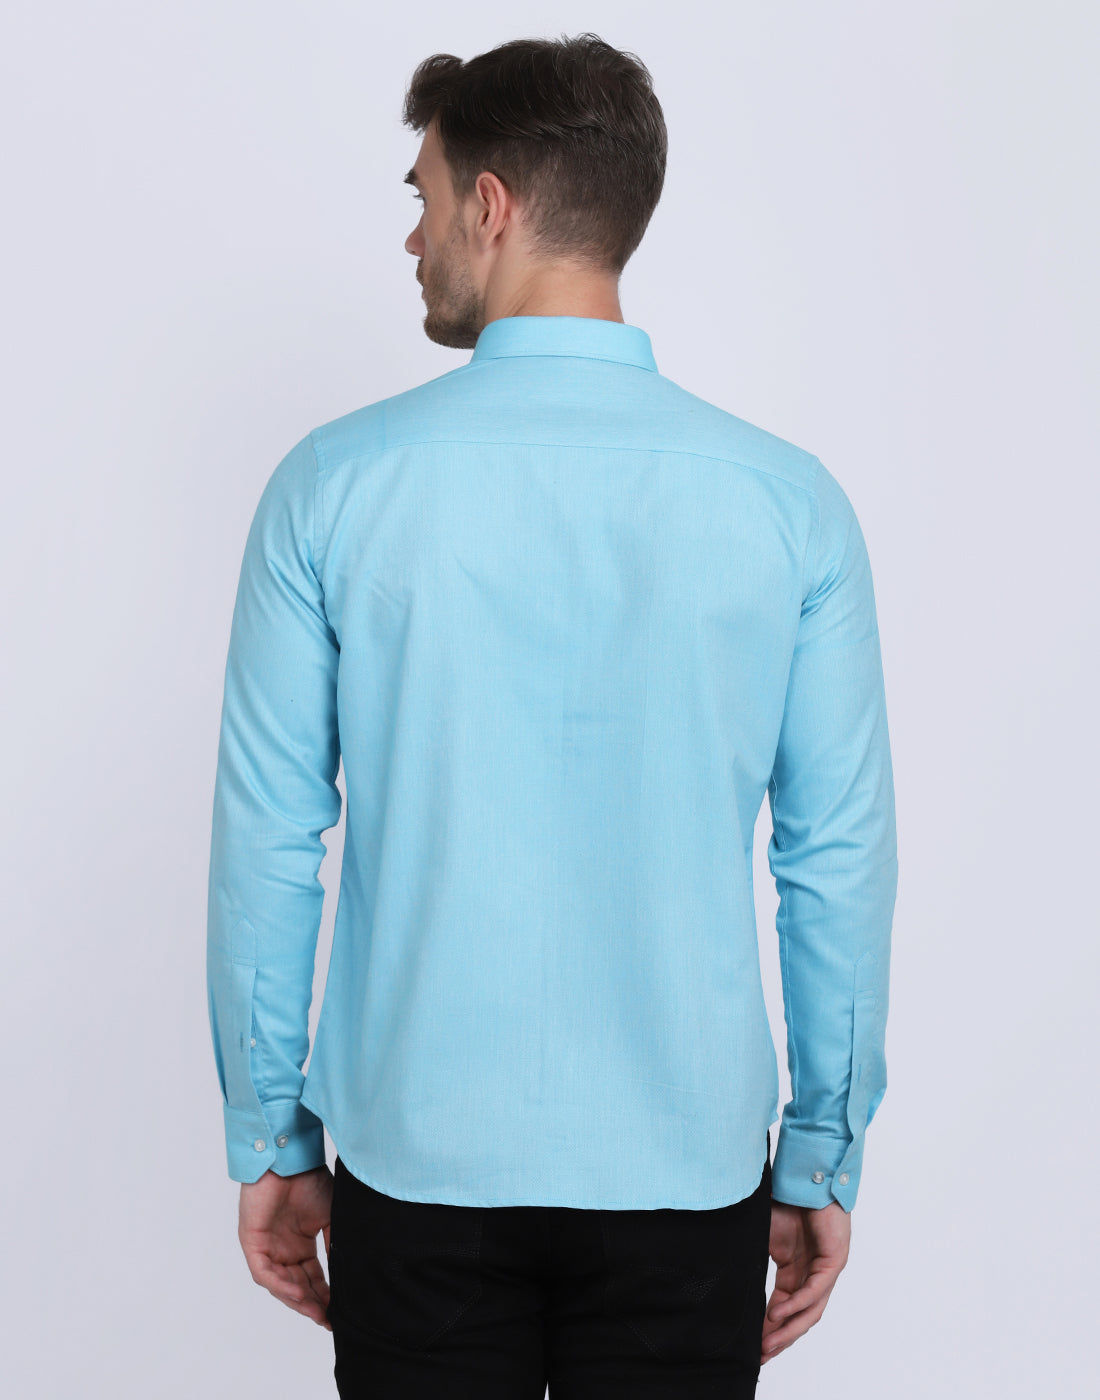 Cotton oxford formal Aqua Shirt